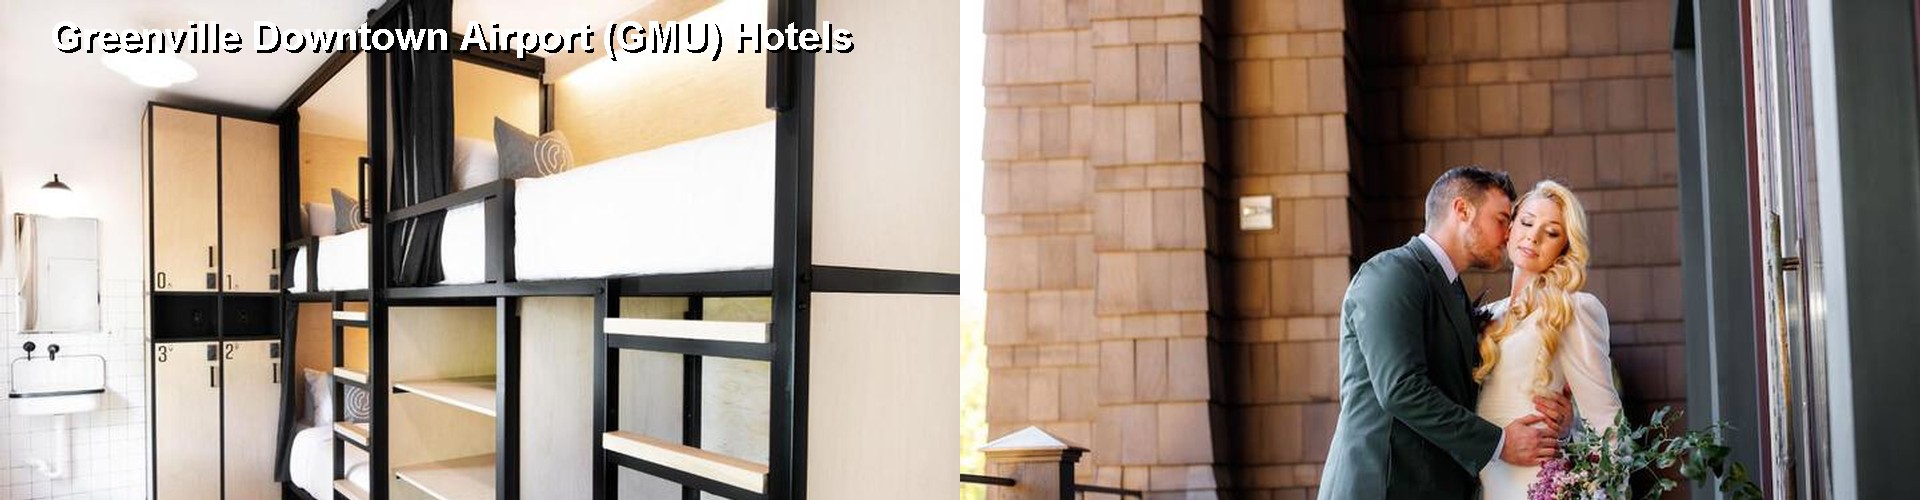 3 Best Hotels near Greenville Downtown Airport (GMU)